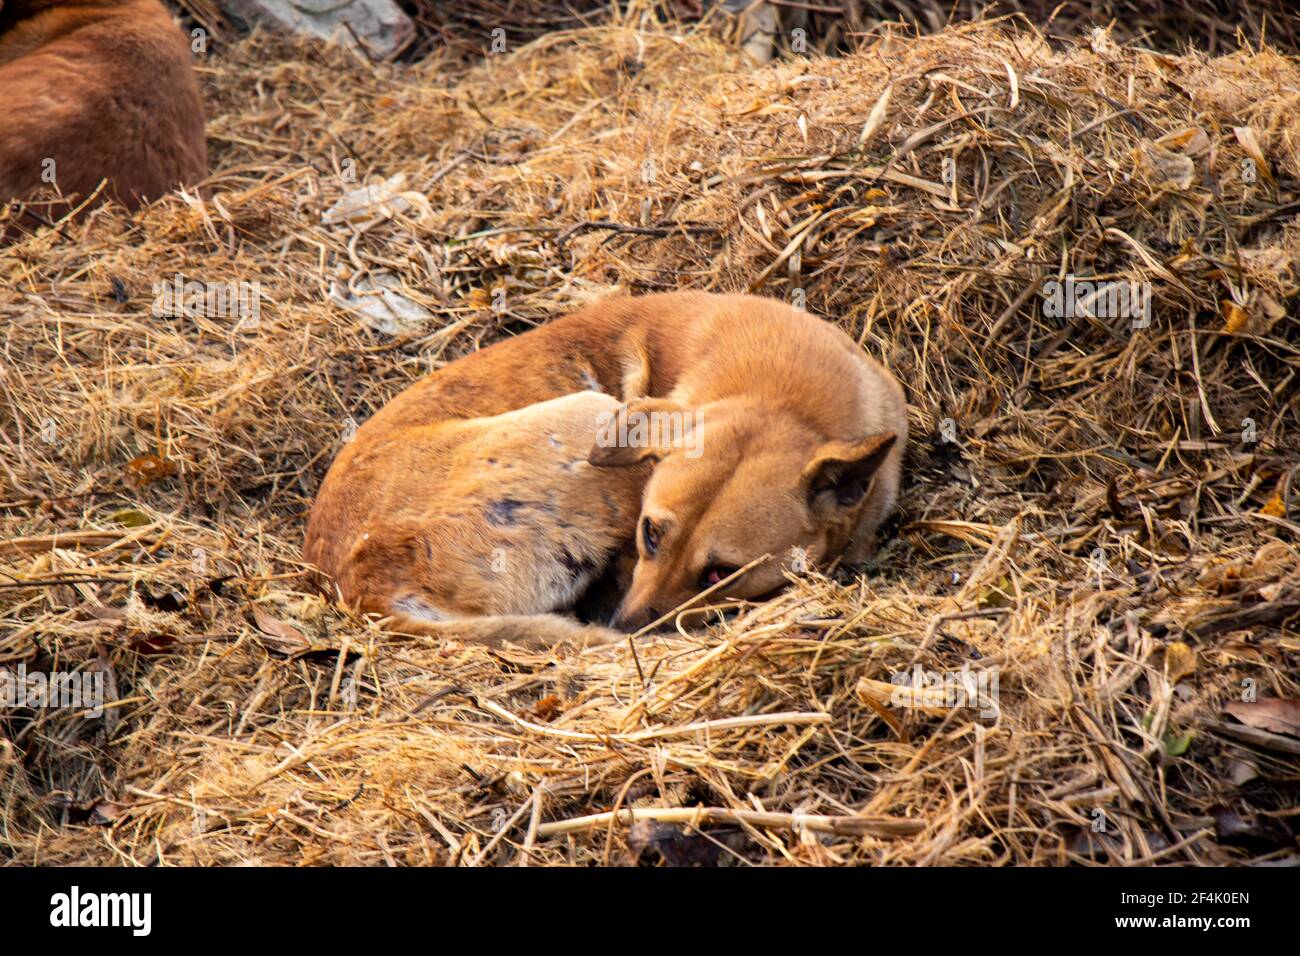 Abandoned stray dog sleeping on the grass Stock Photo